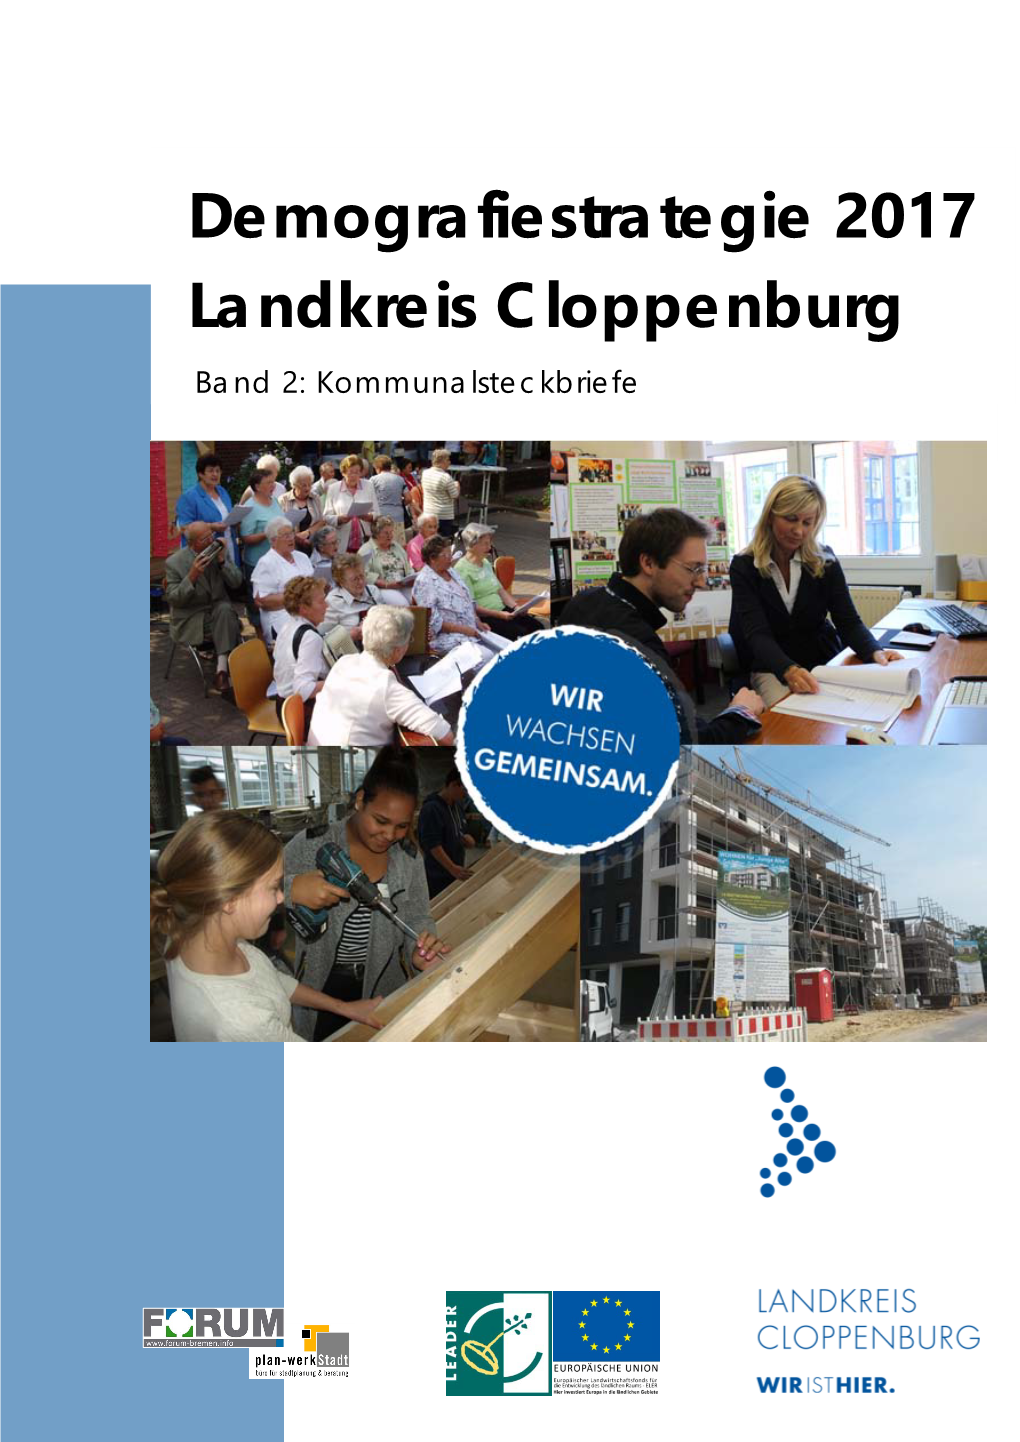 Demografiestrategie 2017 Landkreis Cloppenburg